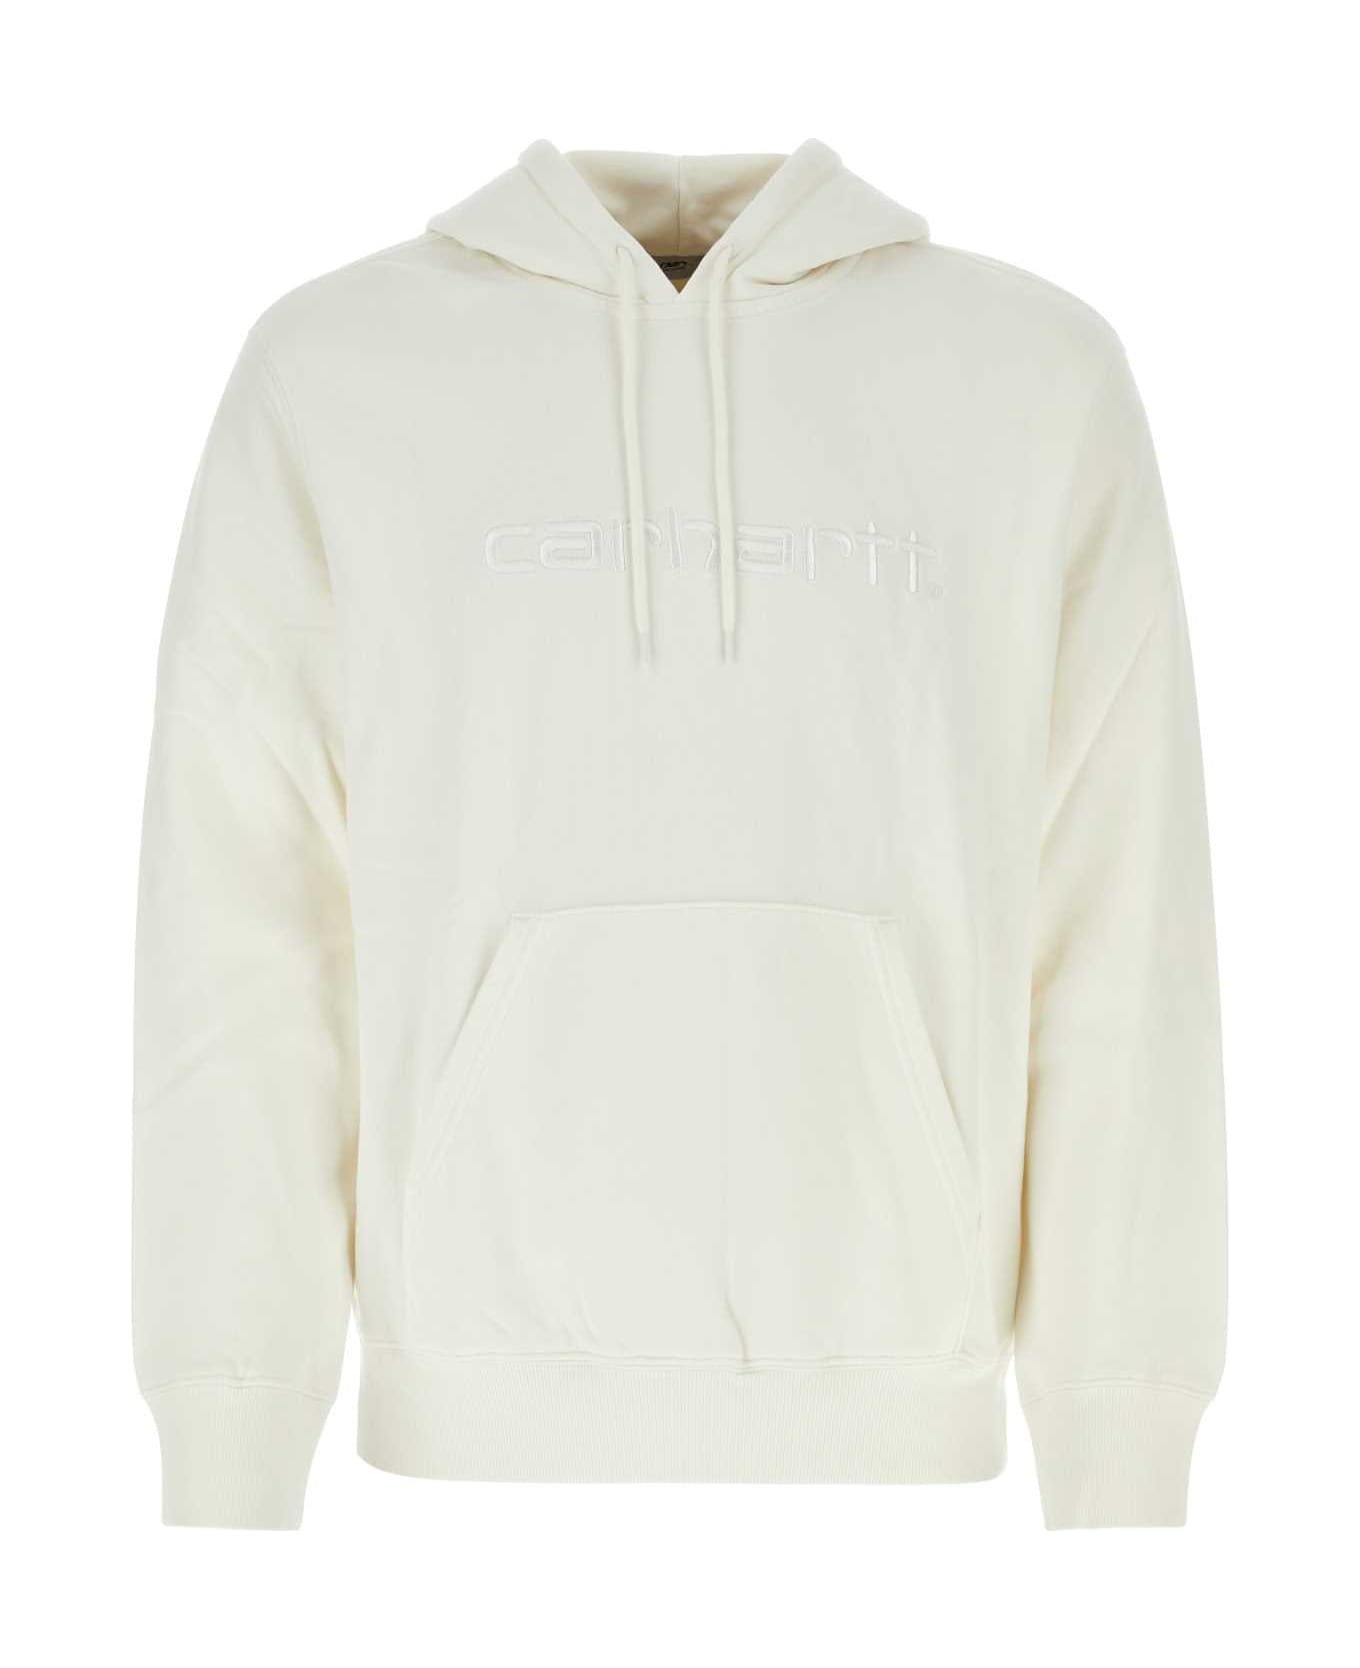 Carhartt White Cotton Hooded Duster Sweatshirt - WAXGARMENTDYED